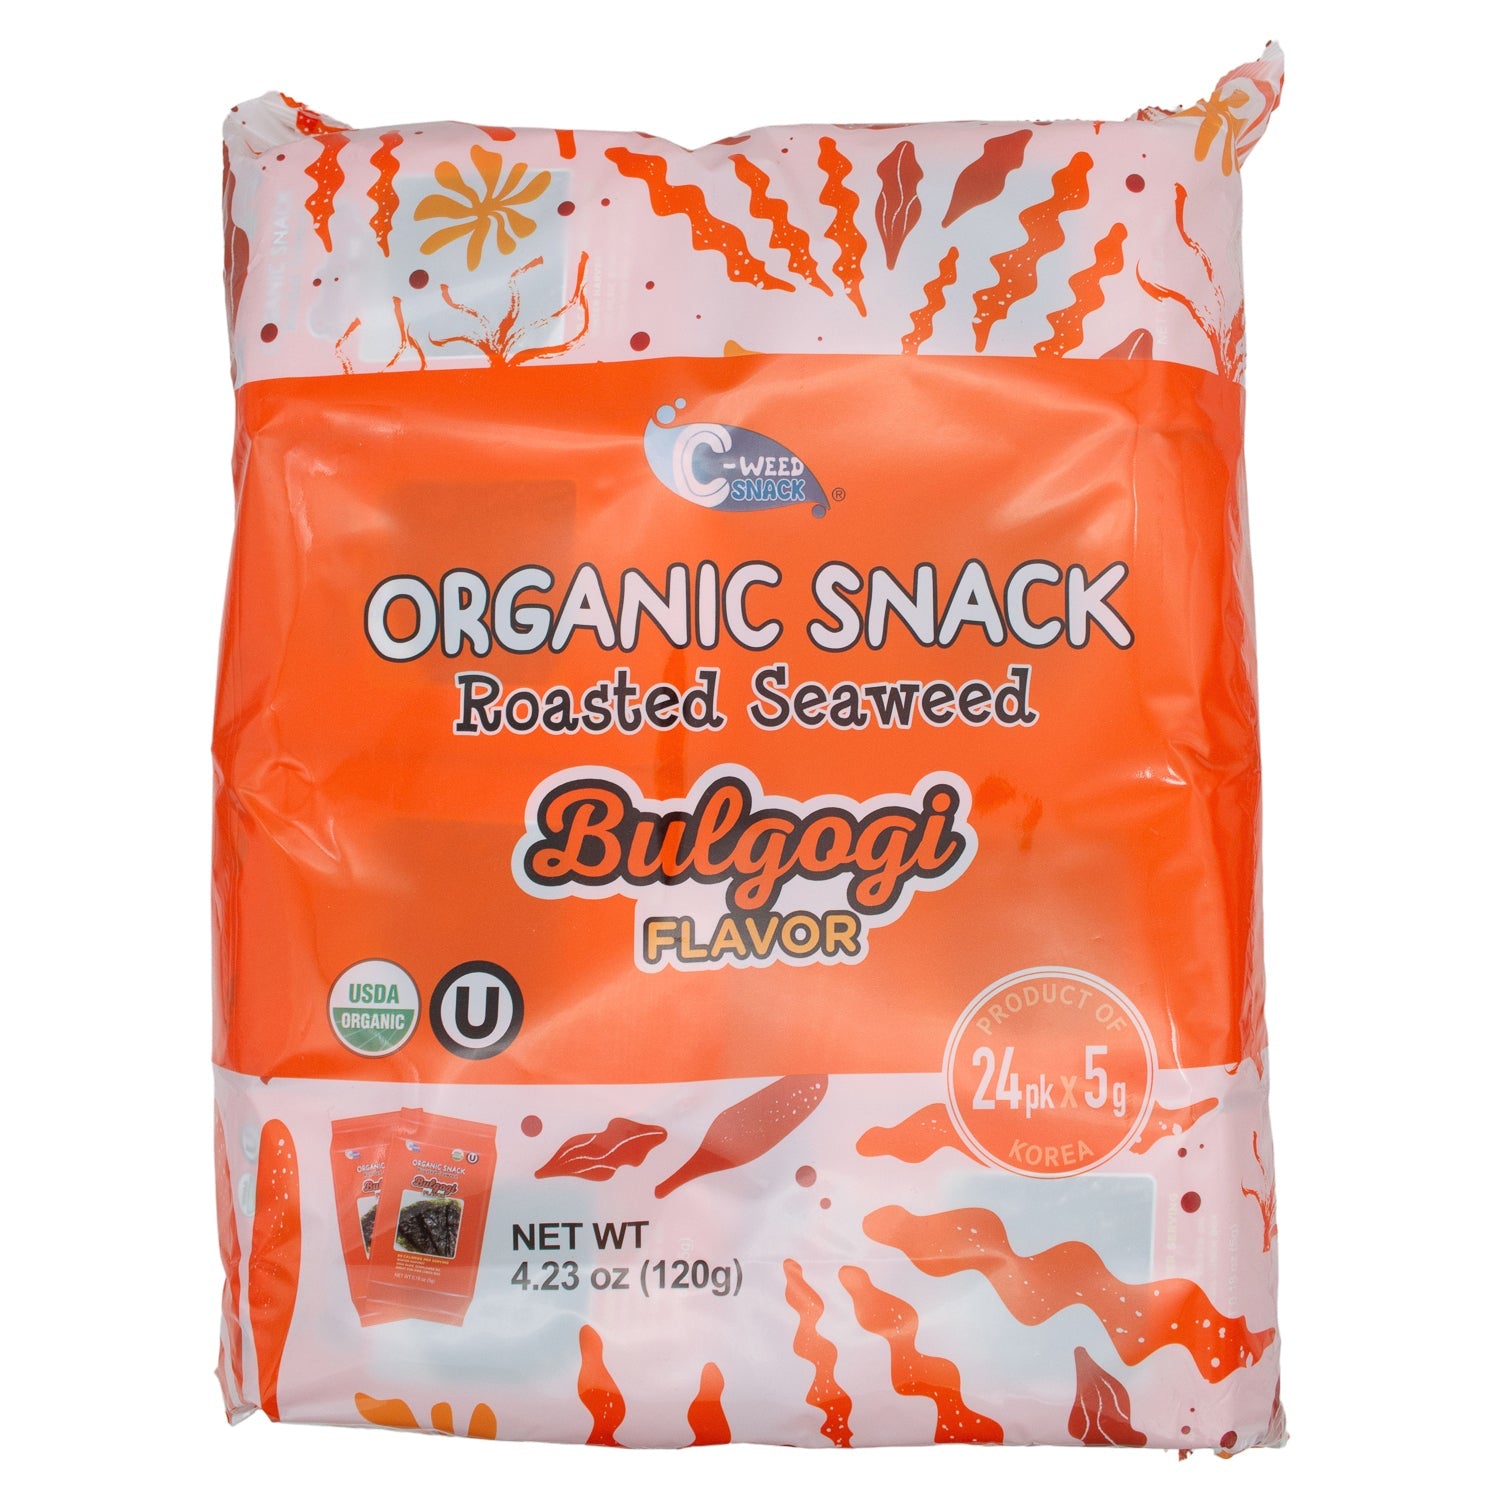 C-Weed Snack Organic Roasted Seaweed Kirkland Signature Bulgogi 5g-24 Count 